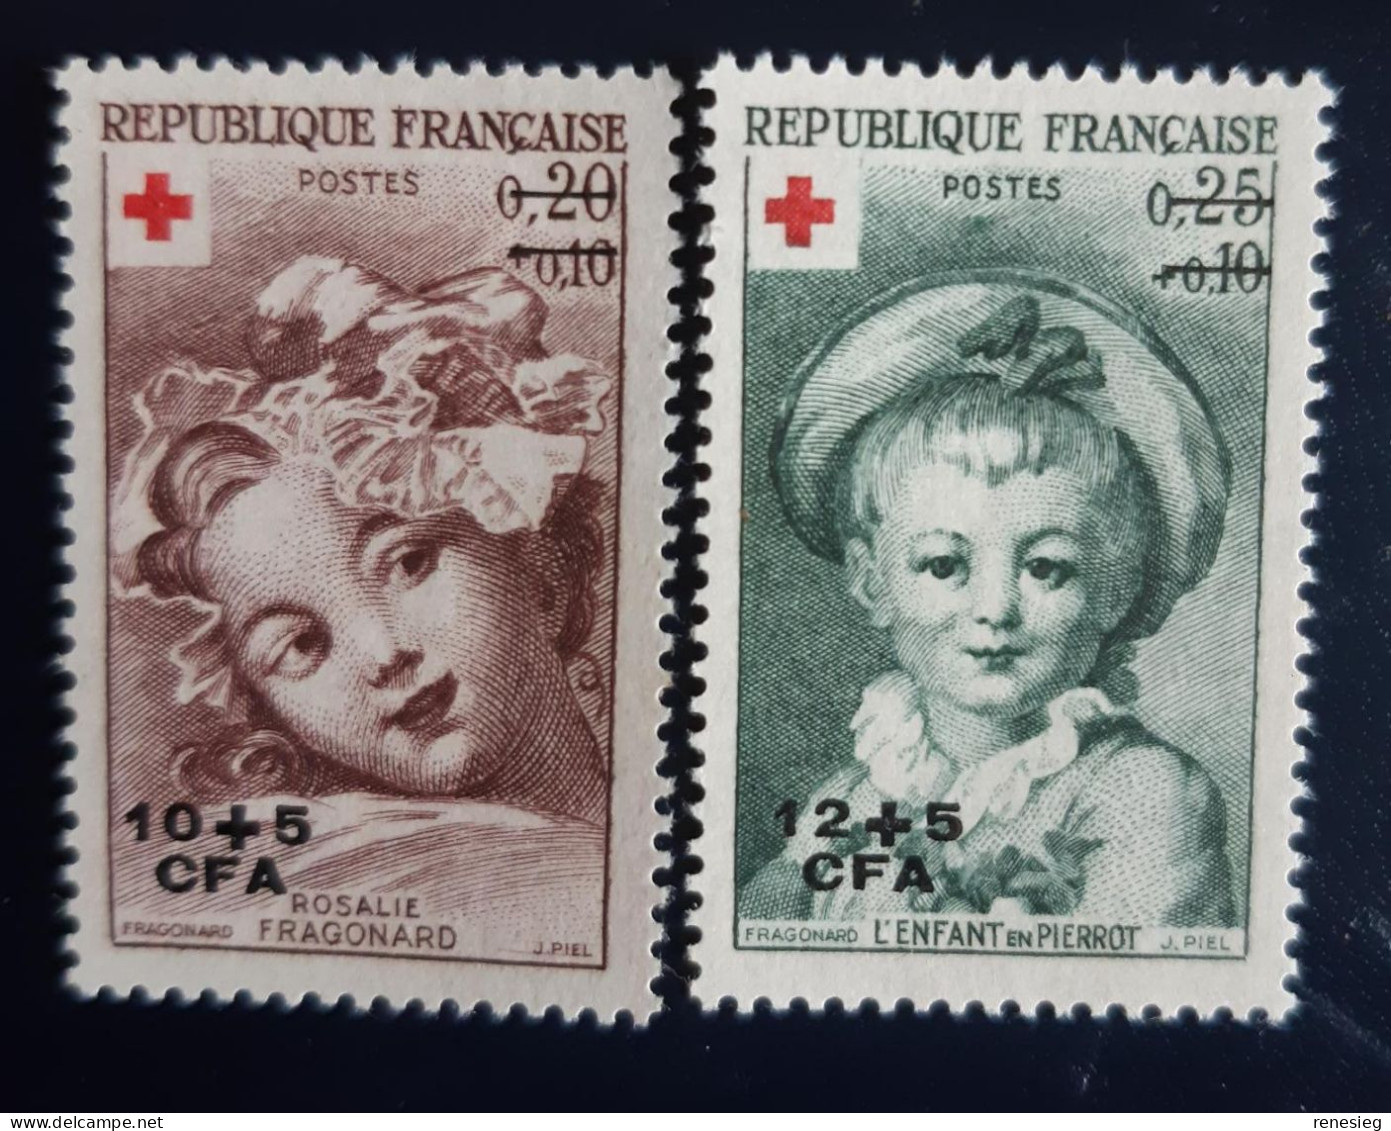 Réunion 1962 Croix-Rouge Yvert 353 & 354 MH - Unused Stamps